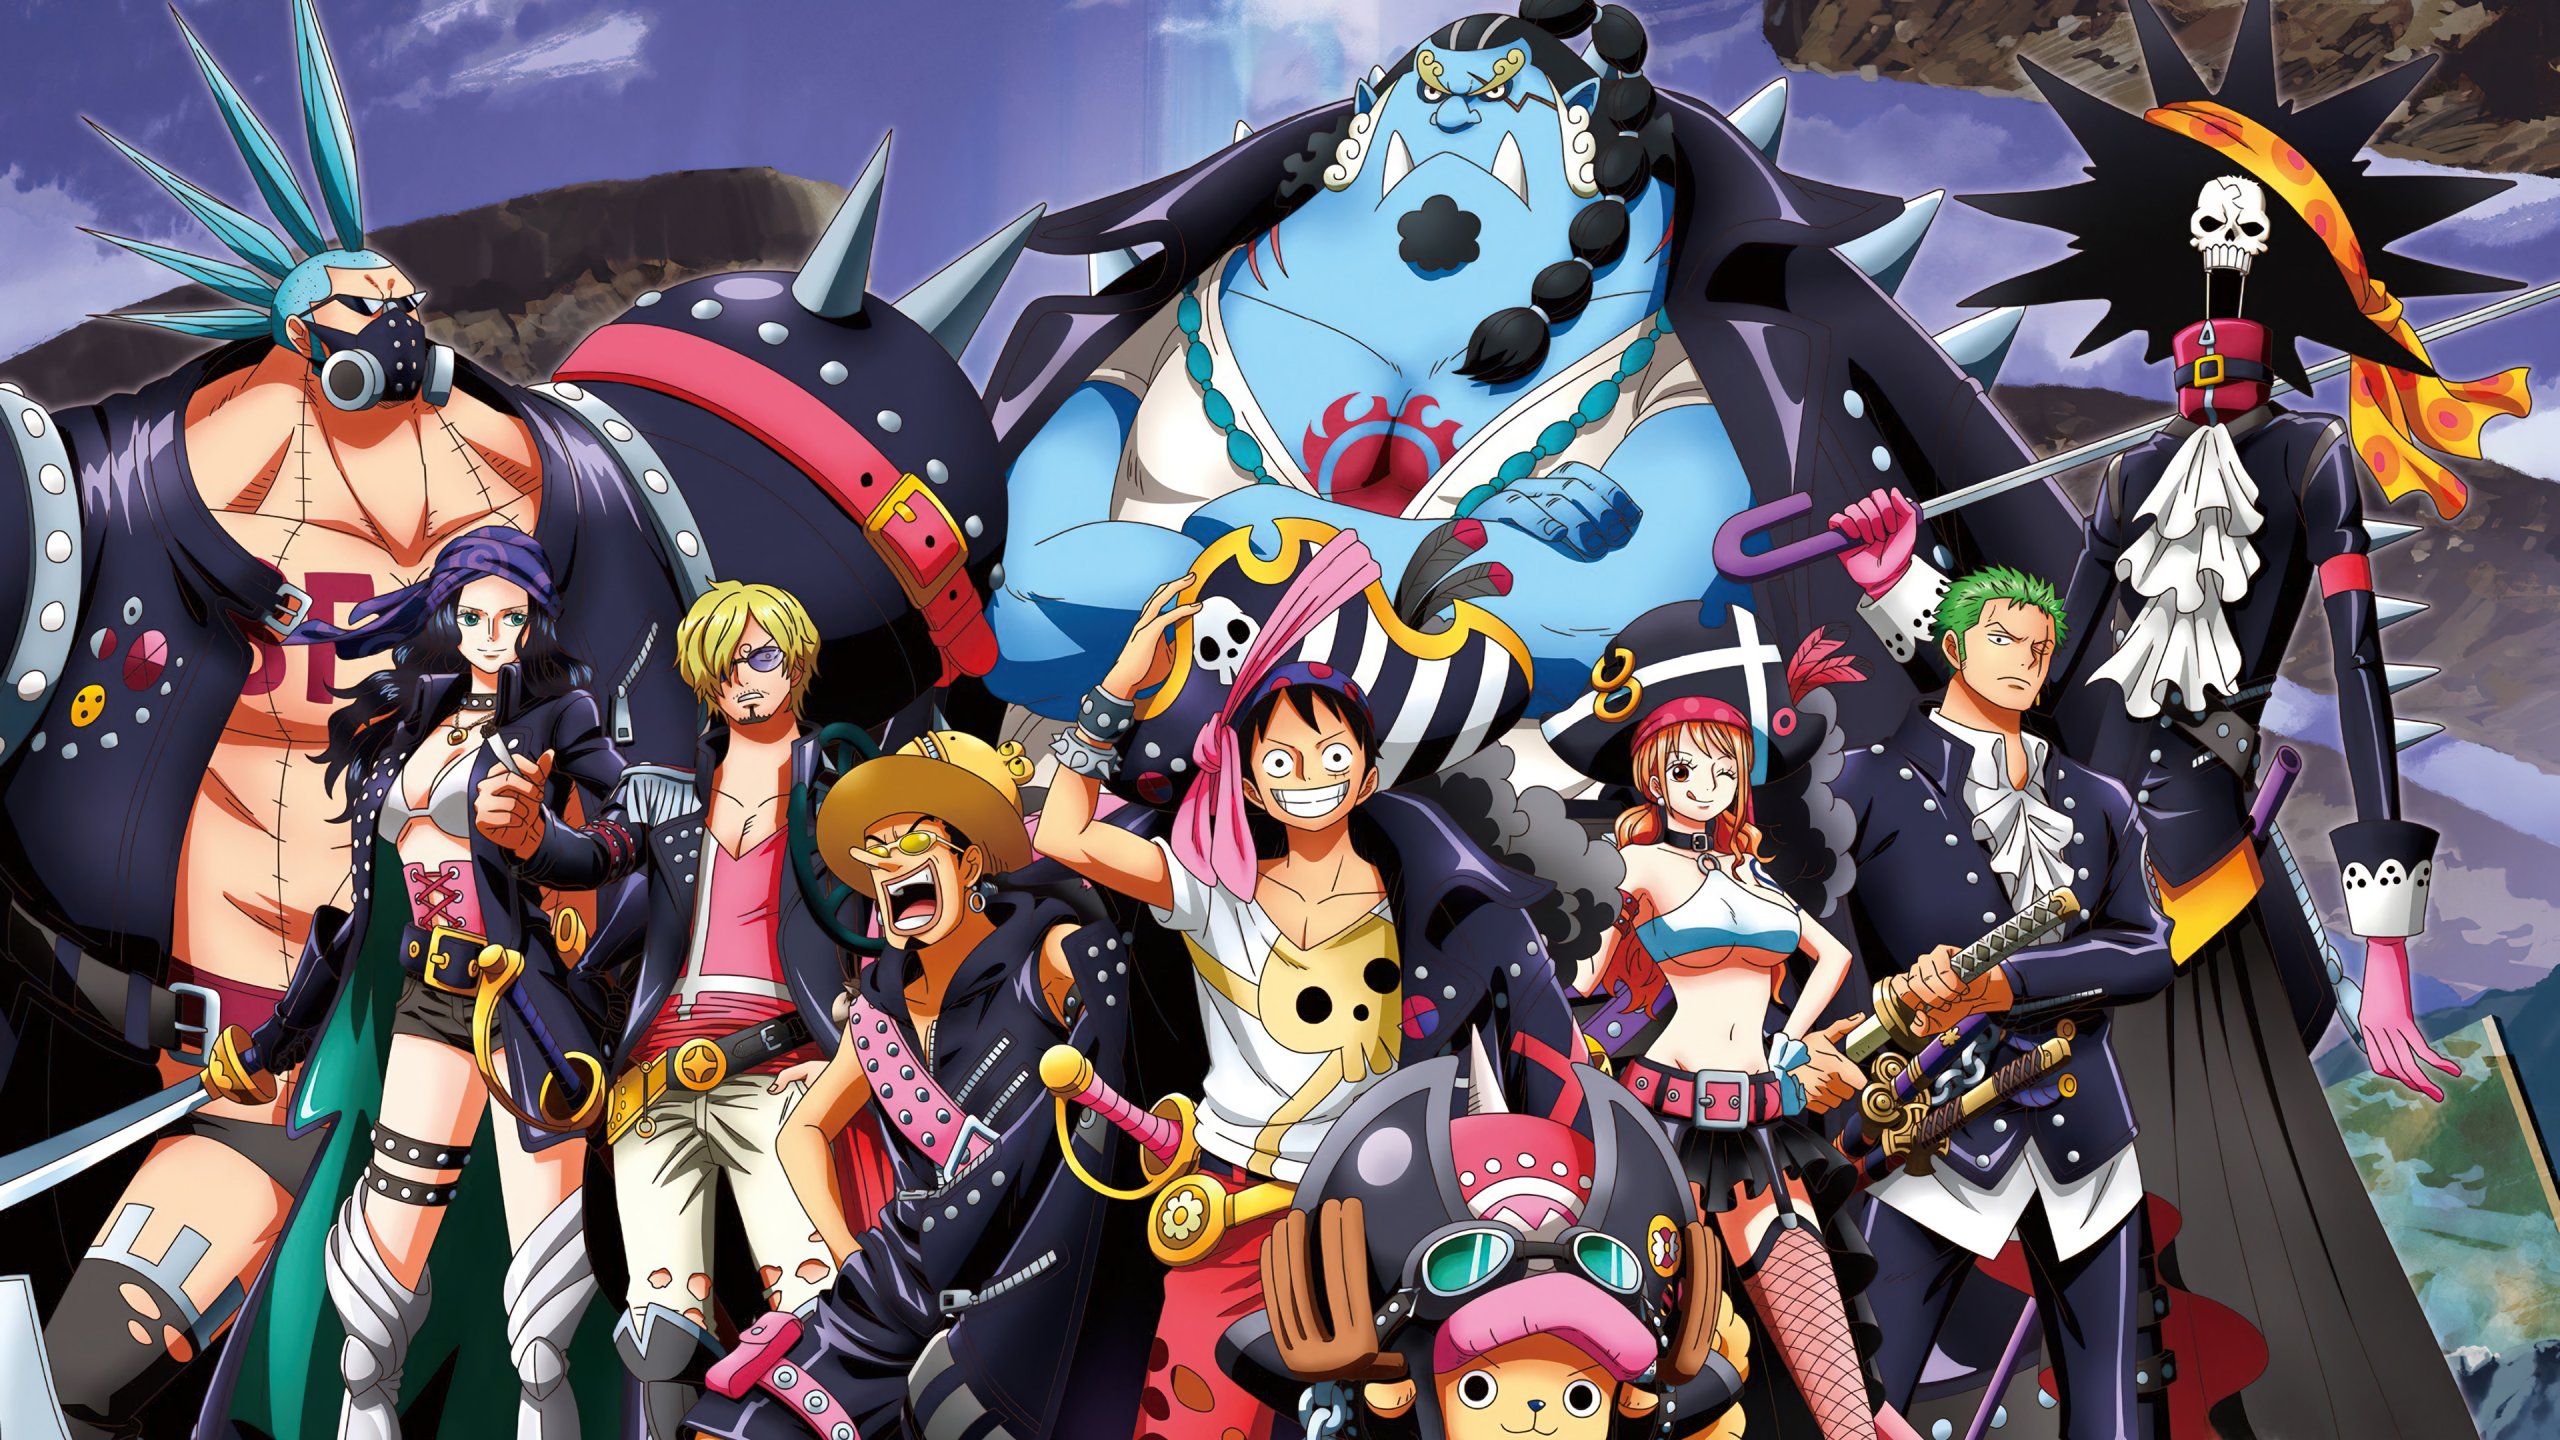 Personajes de One Piece Fondo de pantalla 4k Ultra HD ID:10552